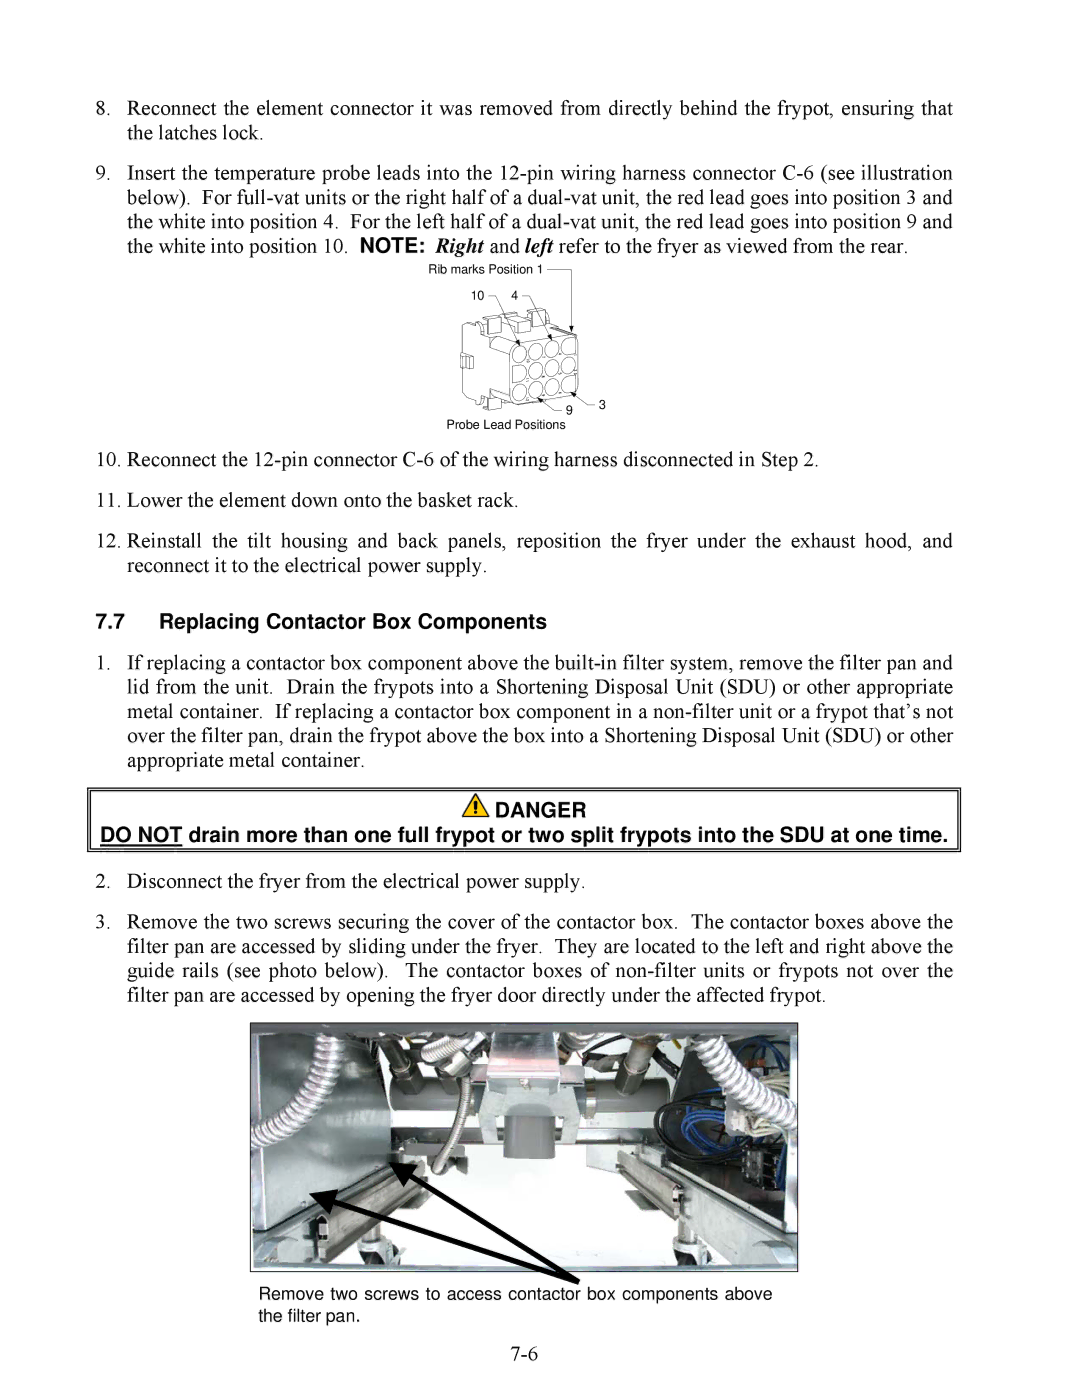 Frymaster E4 manual Replacing Contactor Box Components 